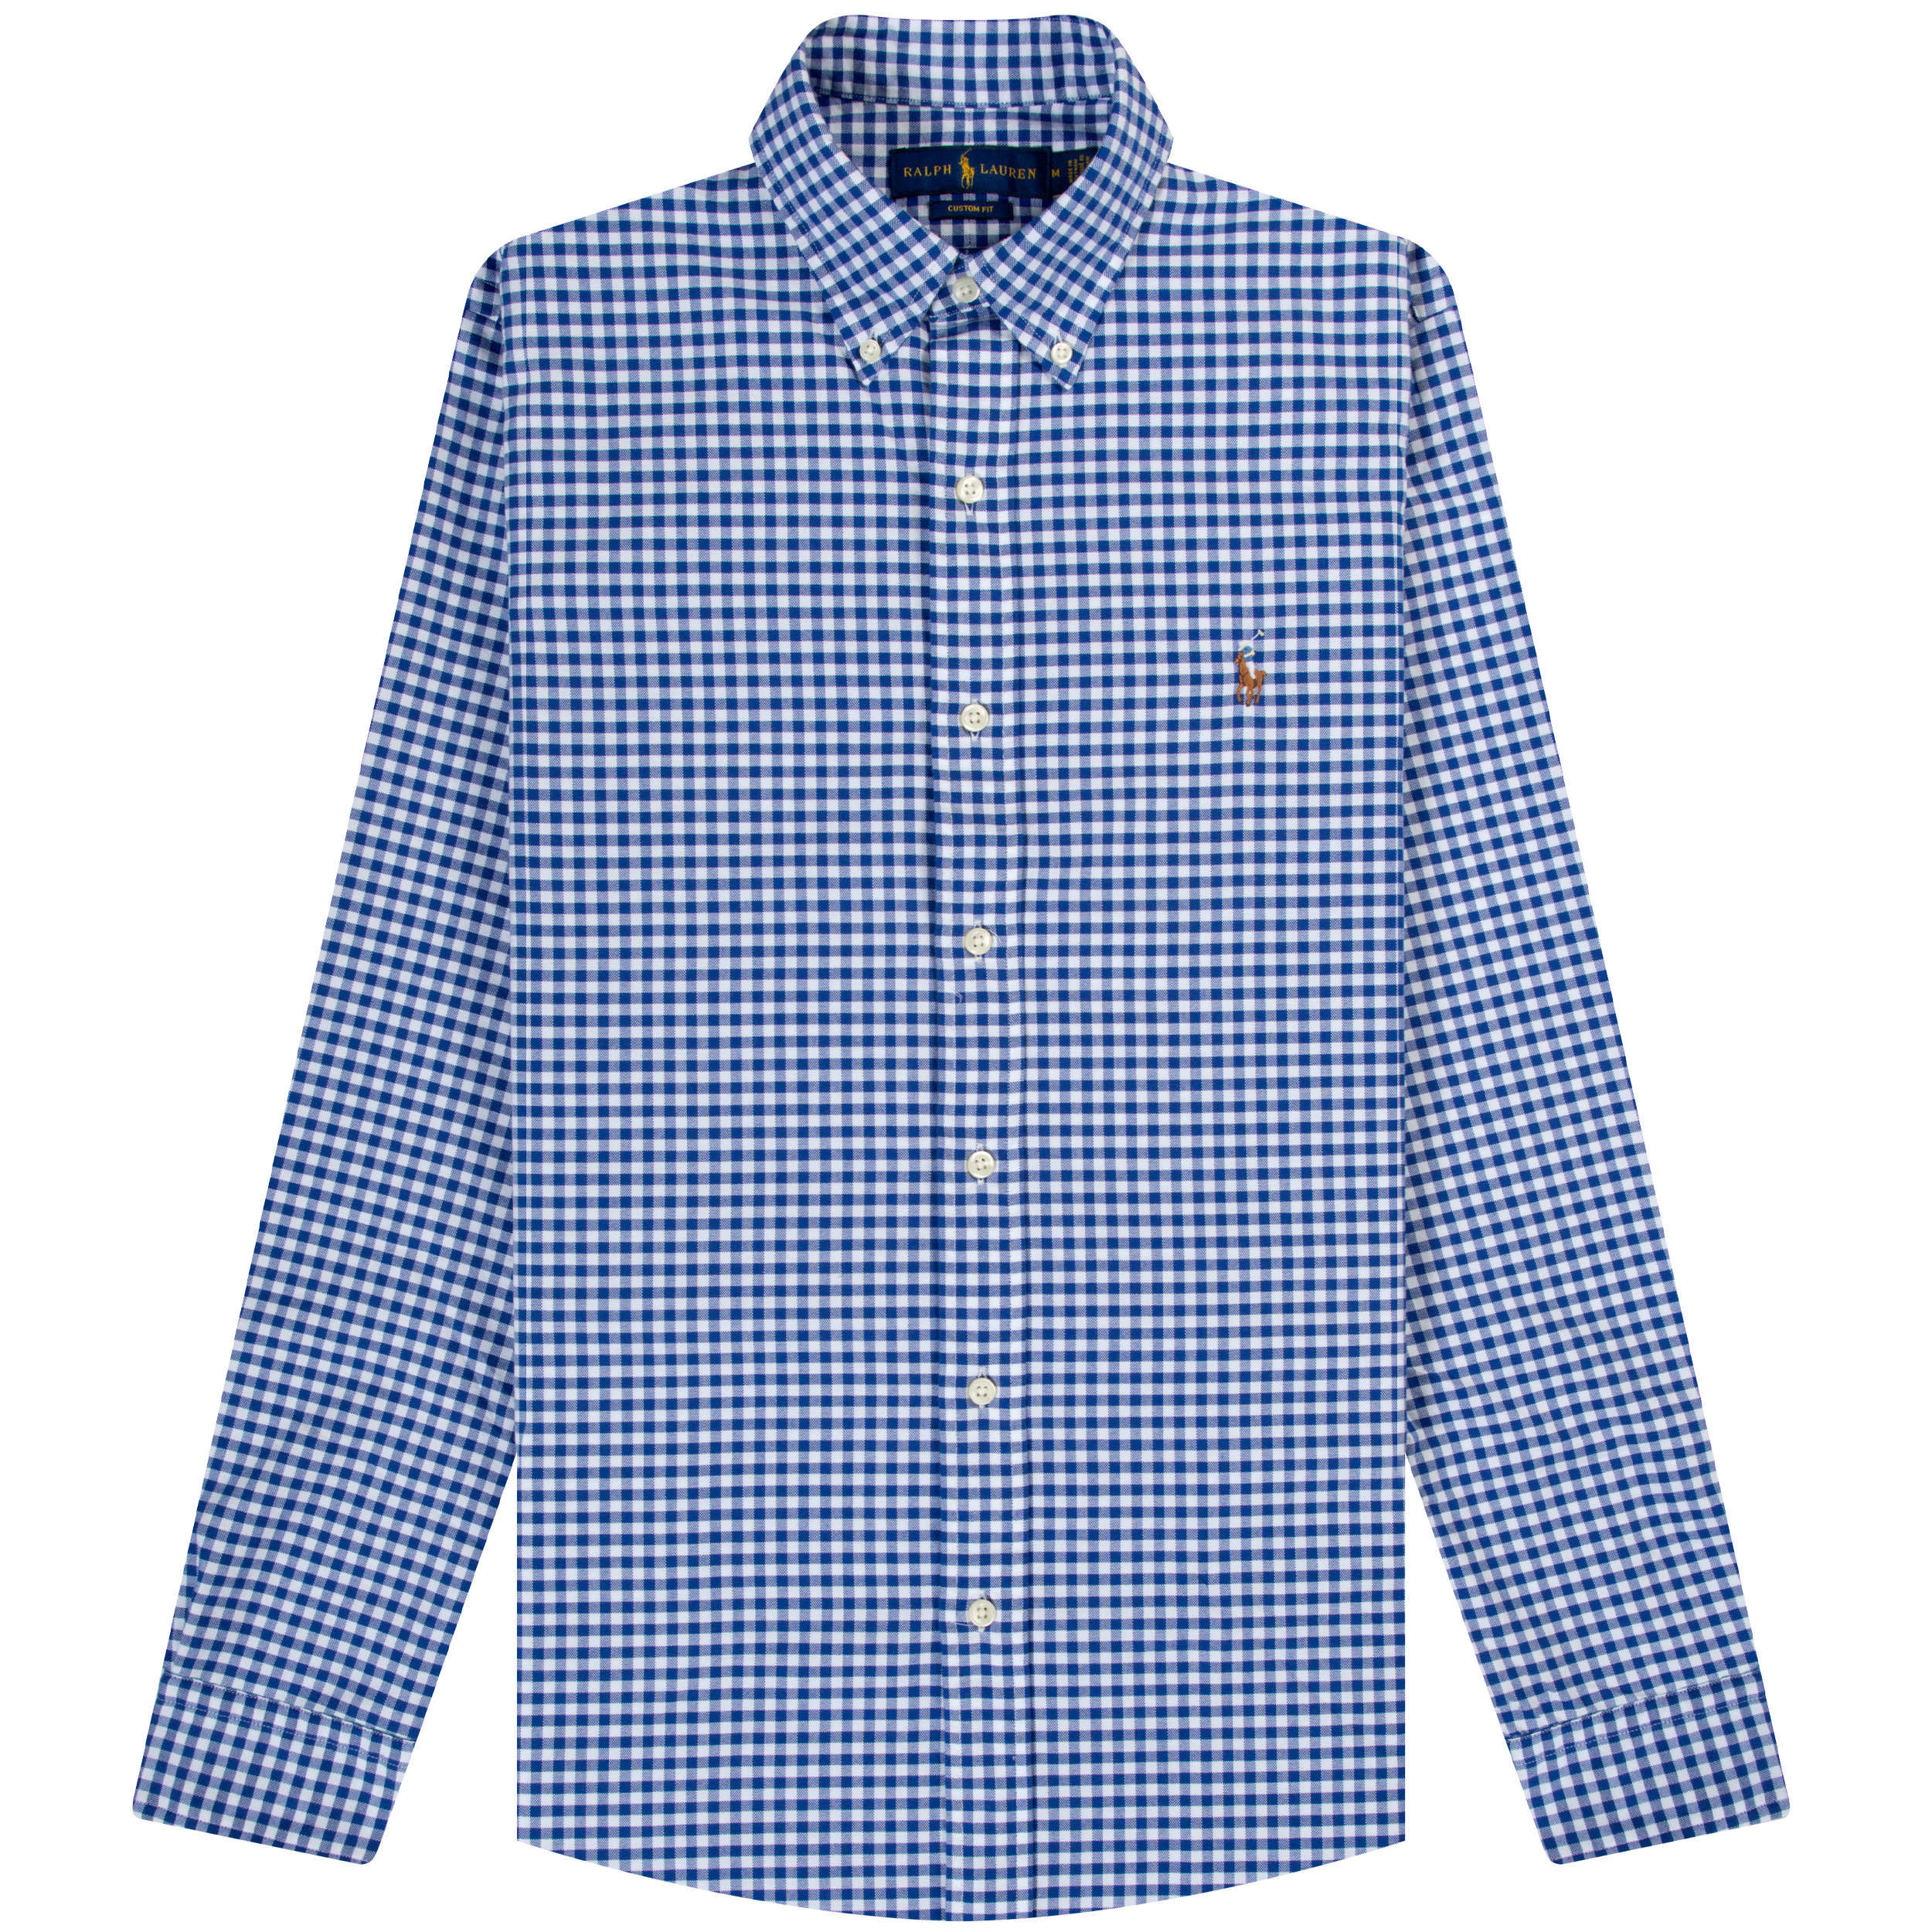 Polo Ralph Lauren SS22 Gingham Check Oxford Shirt Blue/White